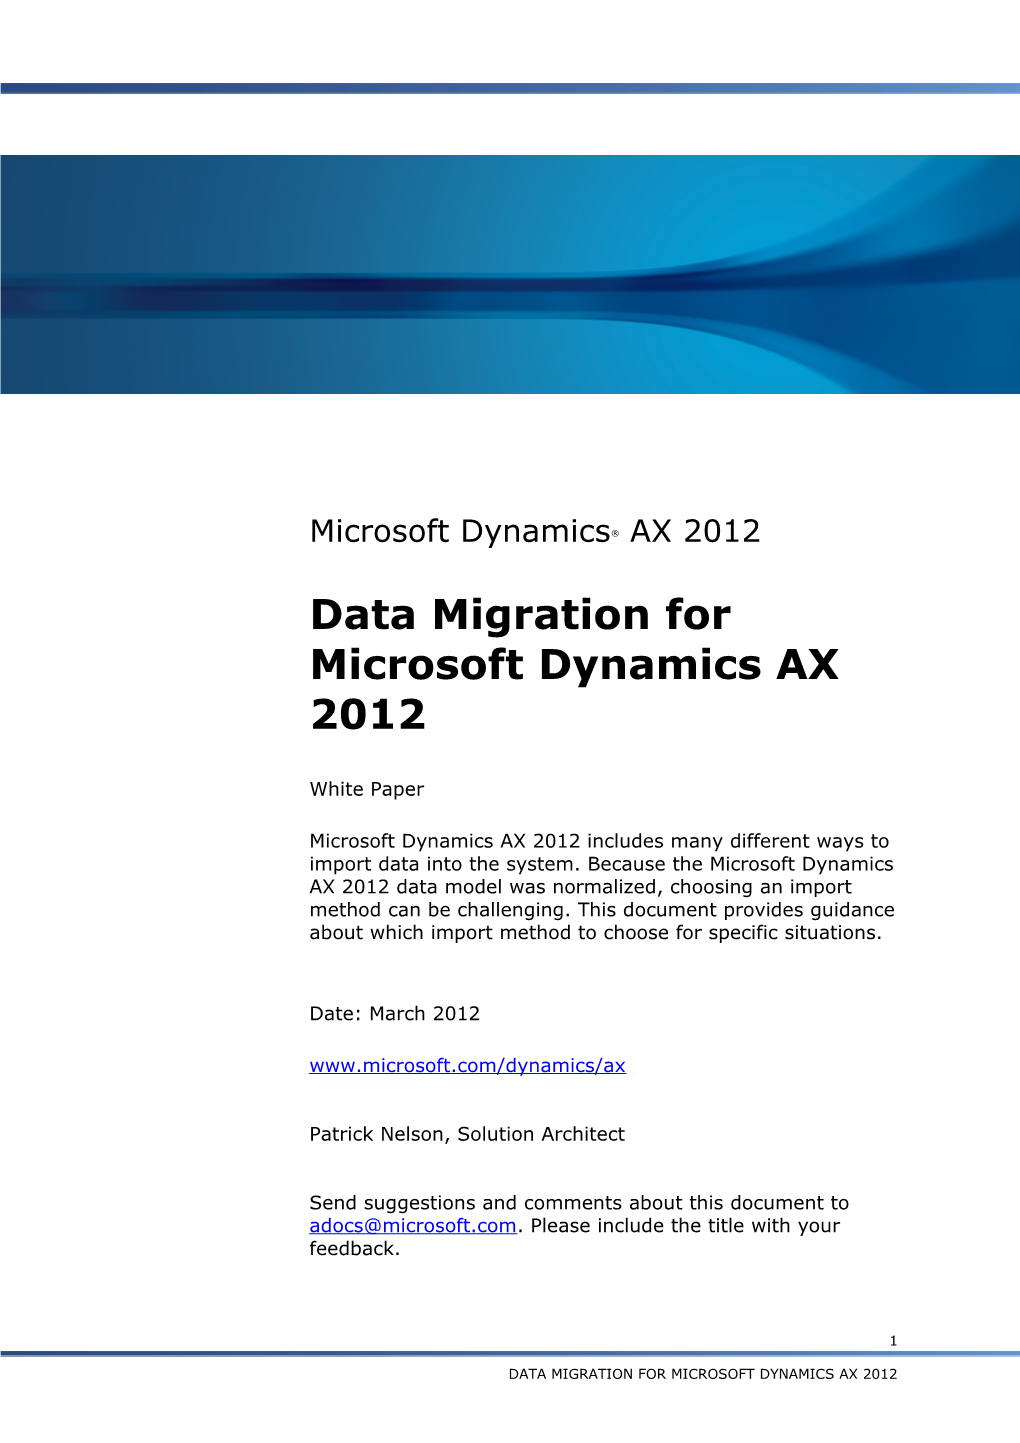 Data Migration for Microsoft Dynamics AX 2012